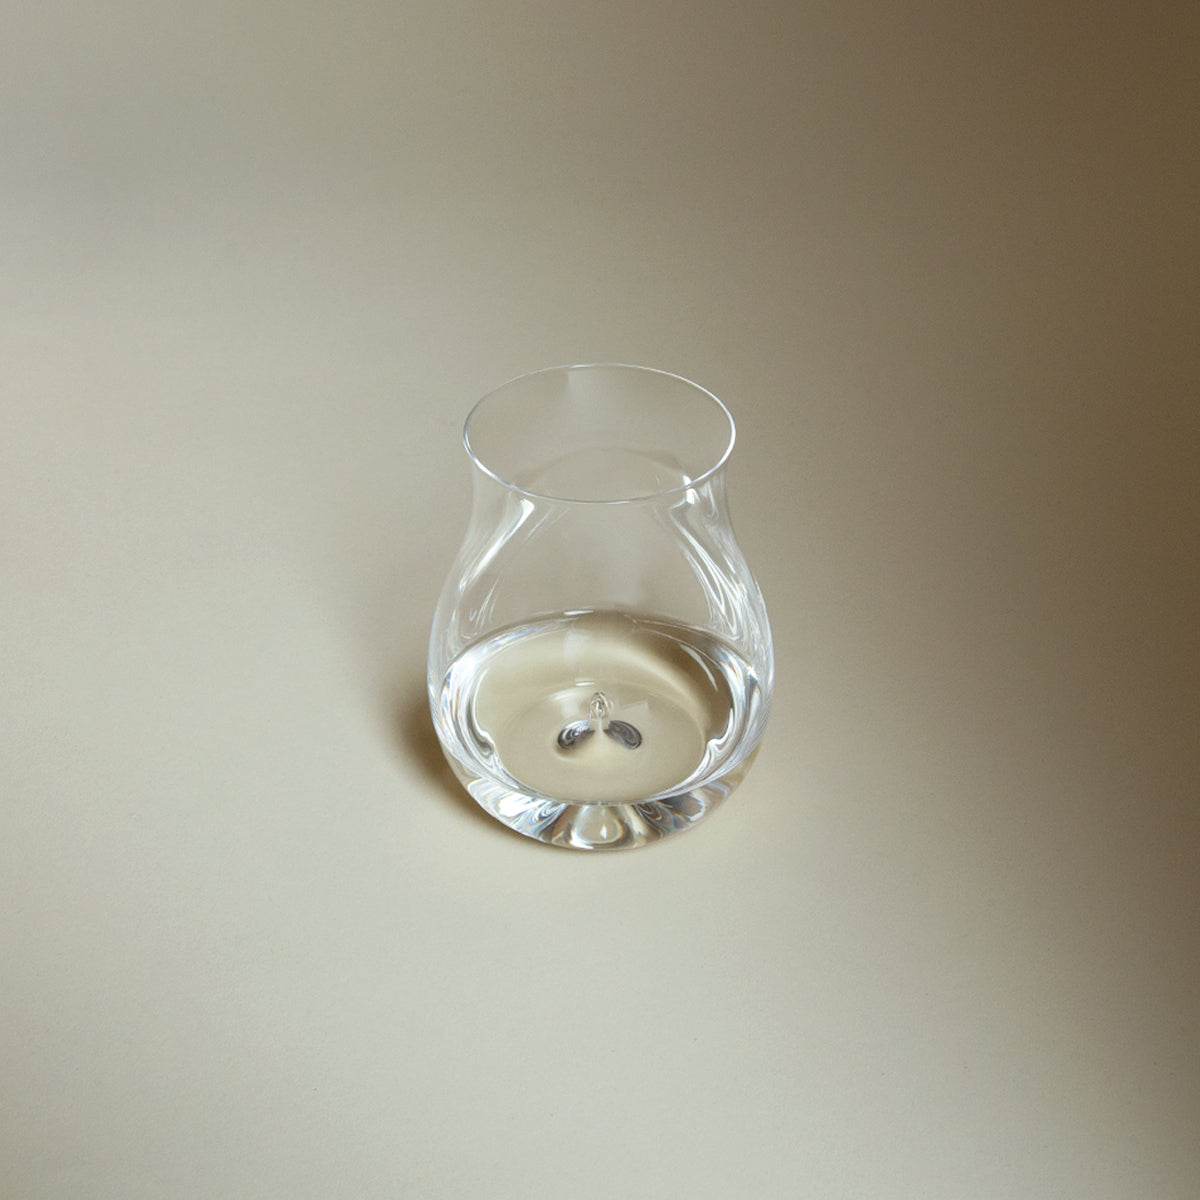 Usuhari Daiginjo Sake Glass